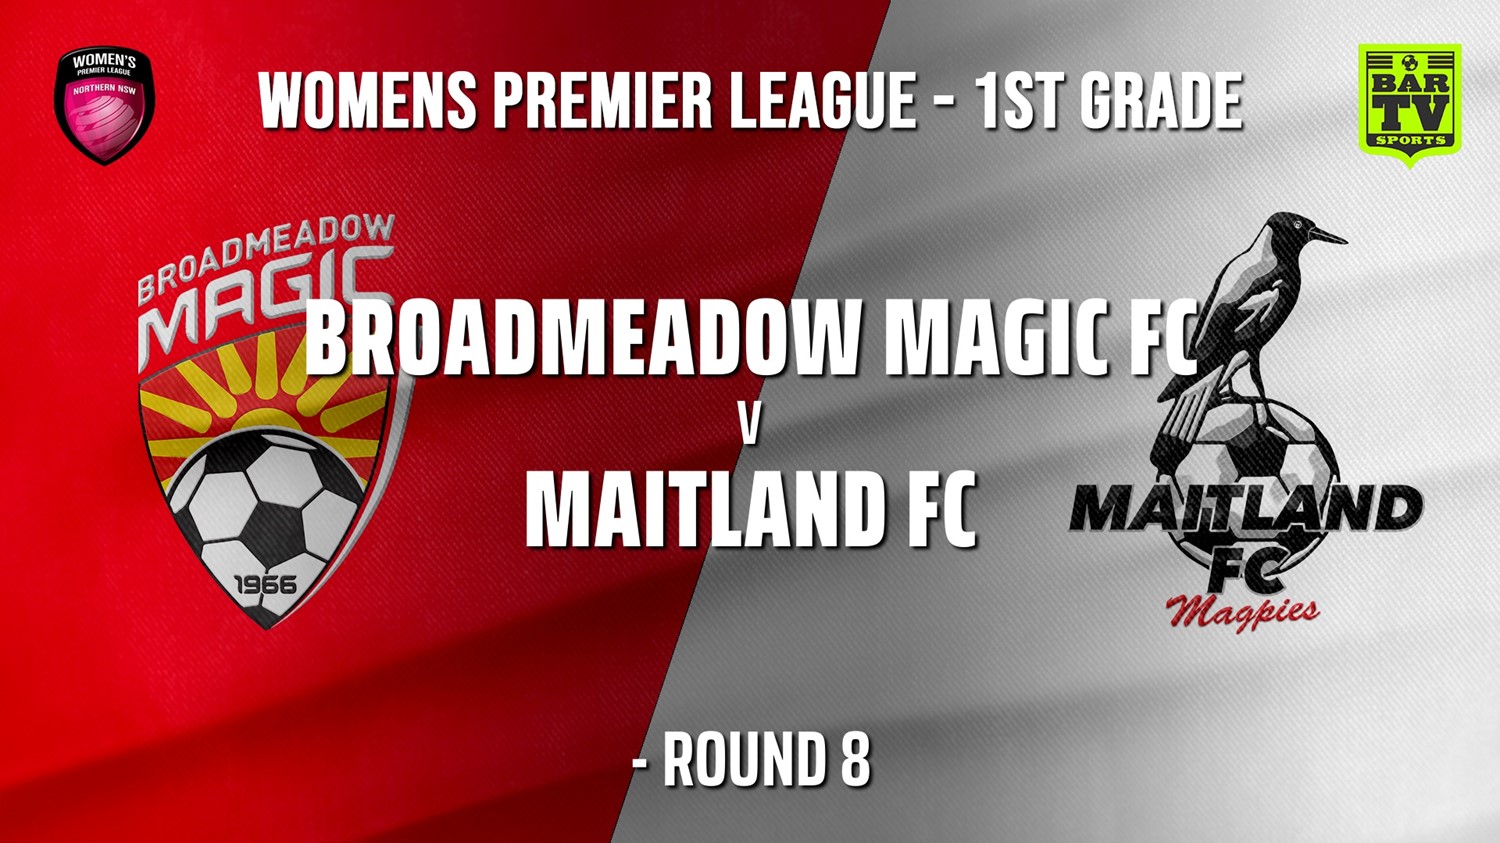 210521-Herald Women’s Premier League Round 8 - Broadmeadow Magic FC (women) v Maitland FC (women) Slate Image